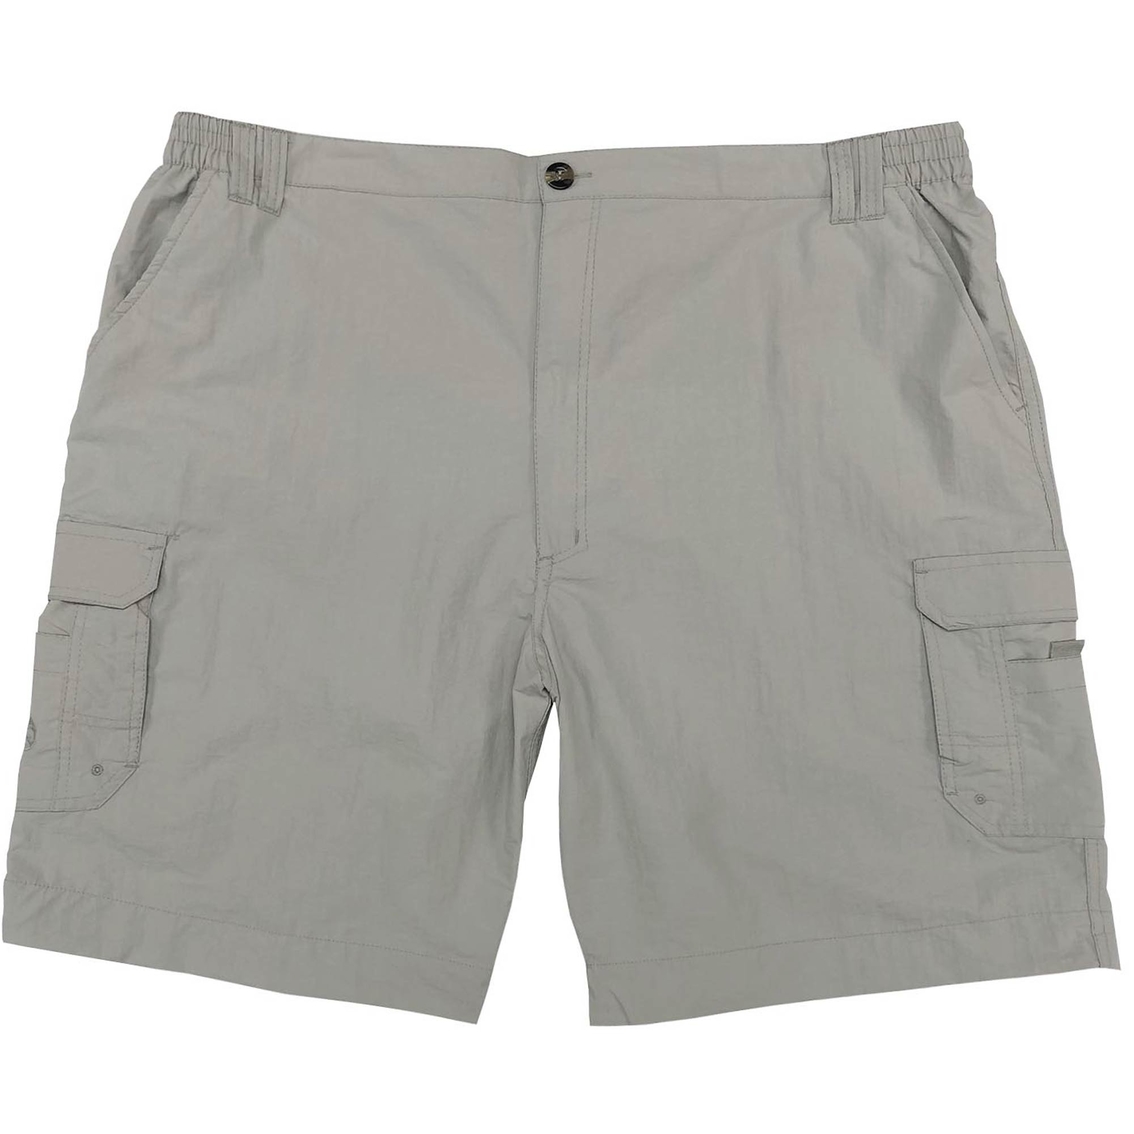 Realtree Fishing Shorts | Shorts | Clothing & Accessories | Shop The ...